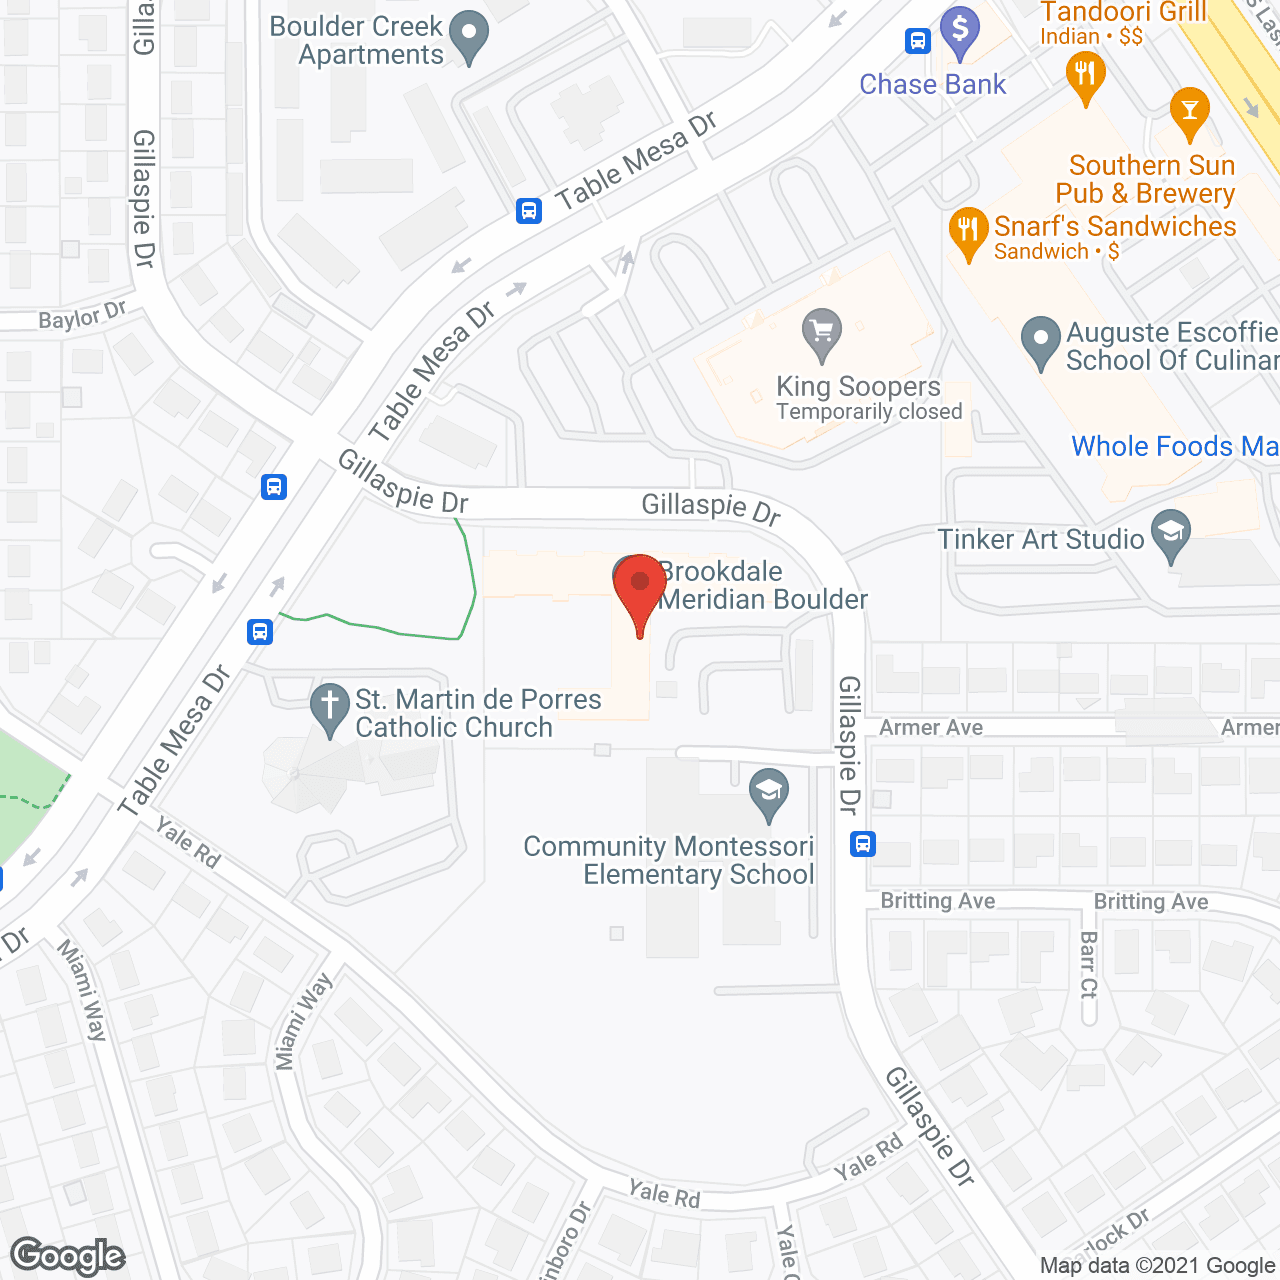 Brookdale Meridian Boulder in google map